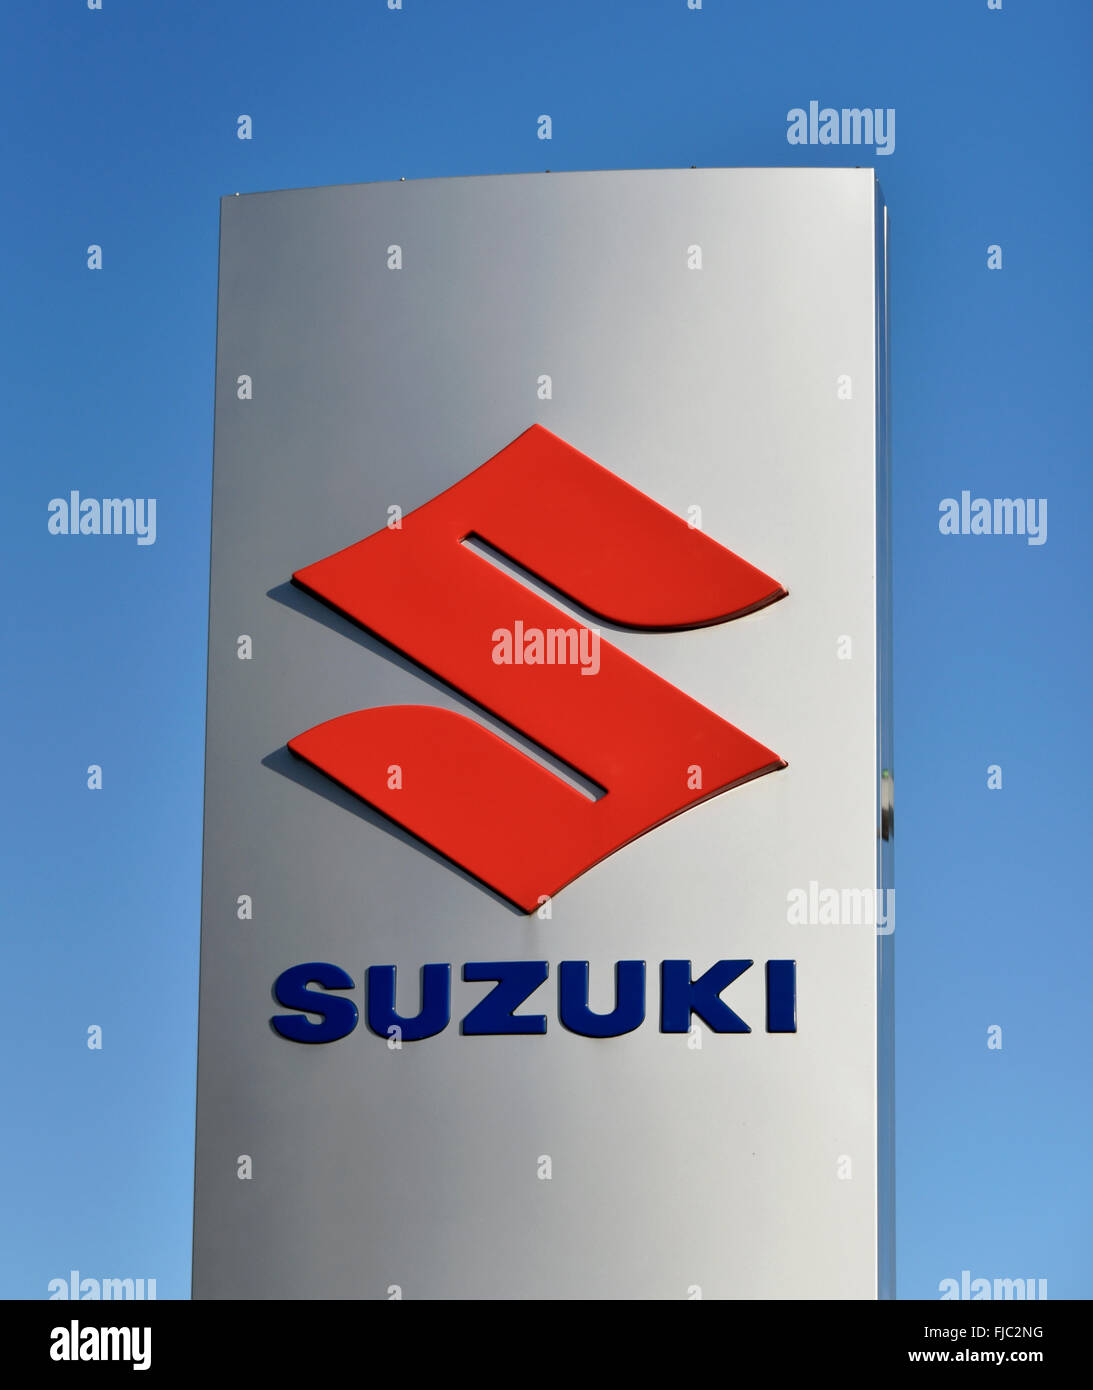 Suzuki Motor Corporation logo. Stock Photo